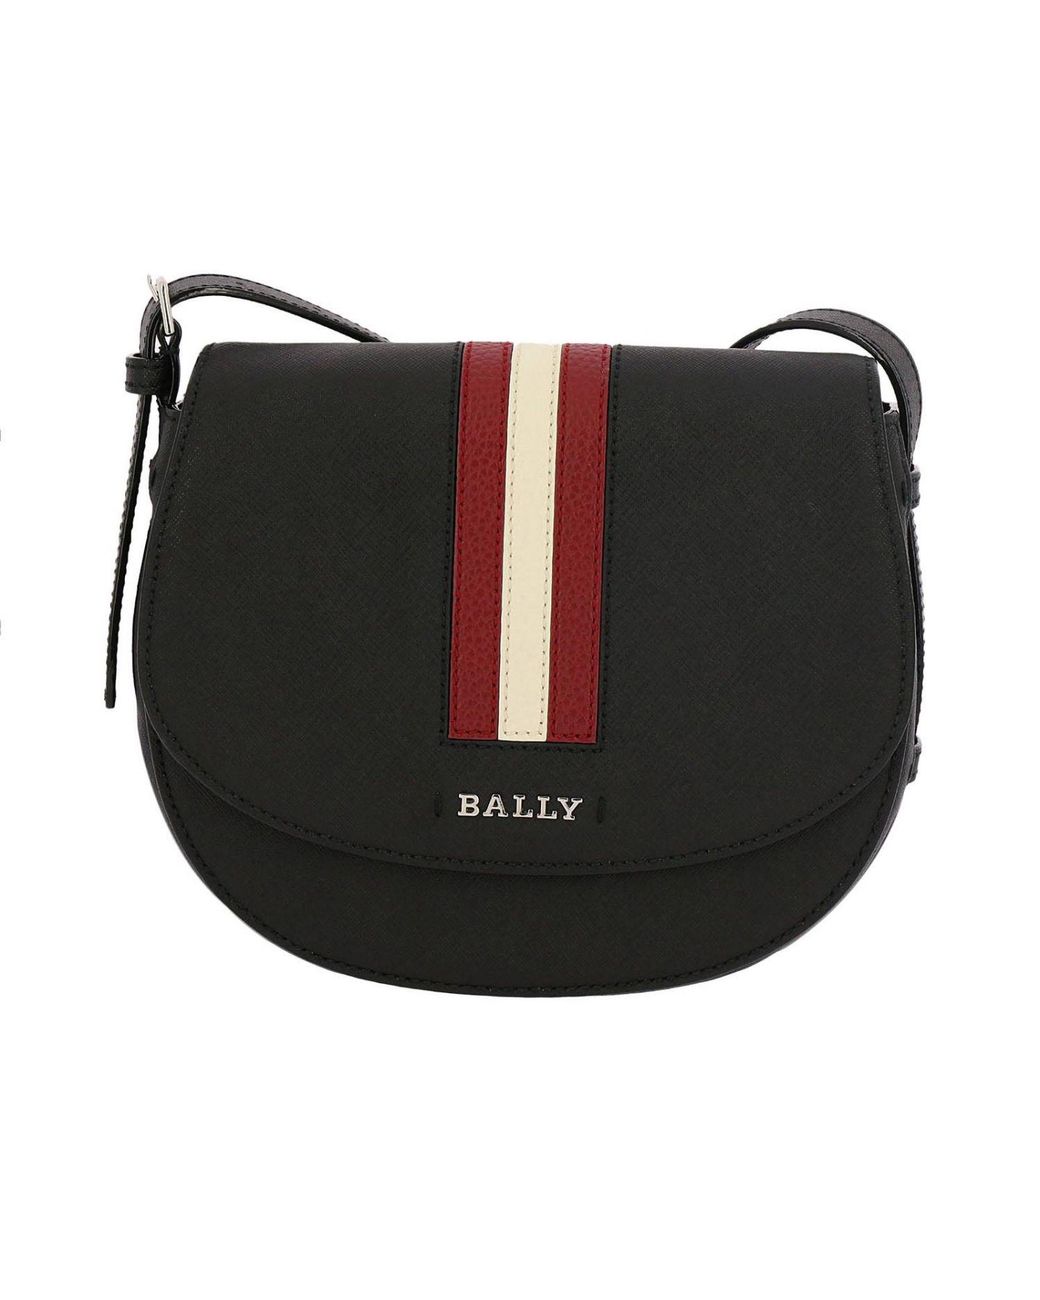 Bally Terino Stripe-Strap Leather Crossbody Bag on SALE | Saks OFF 5TH